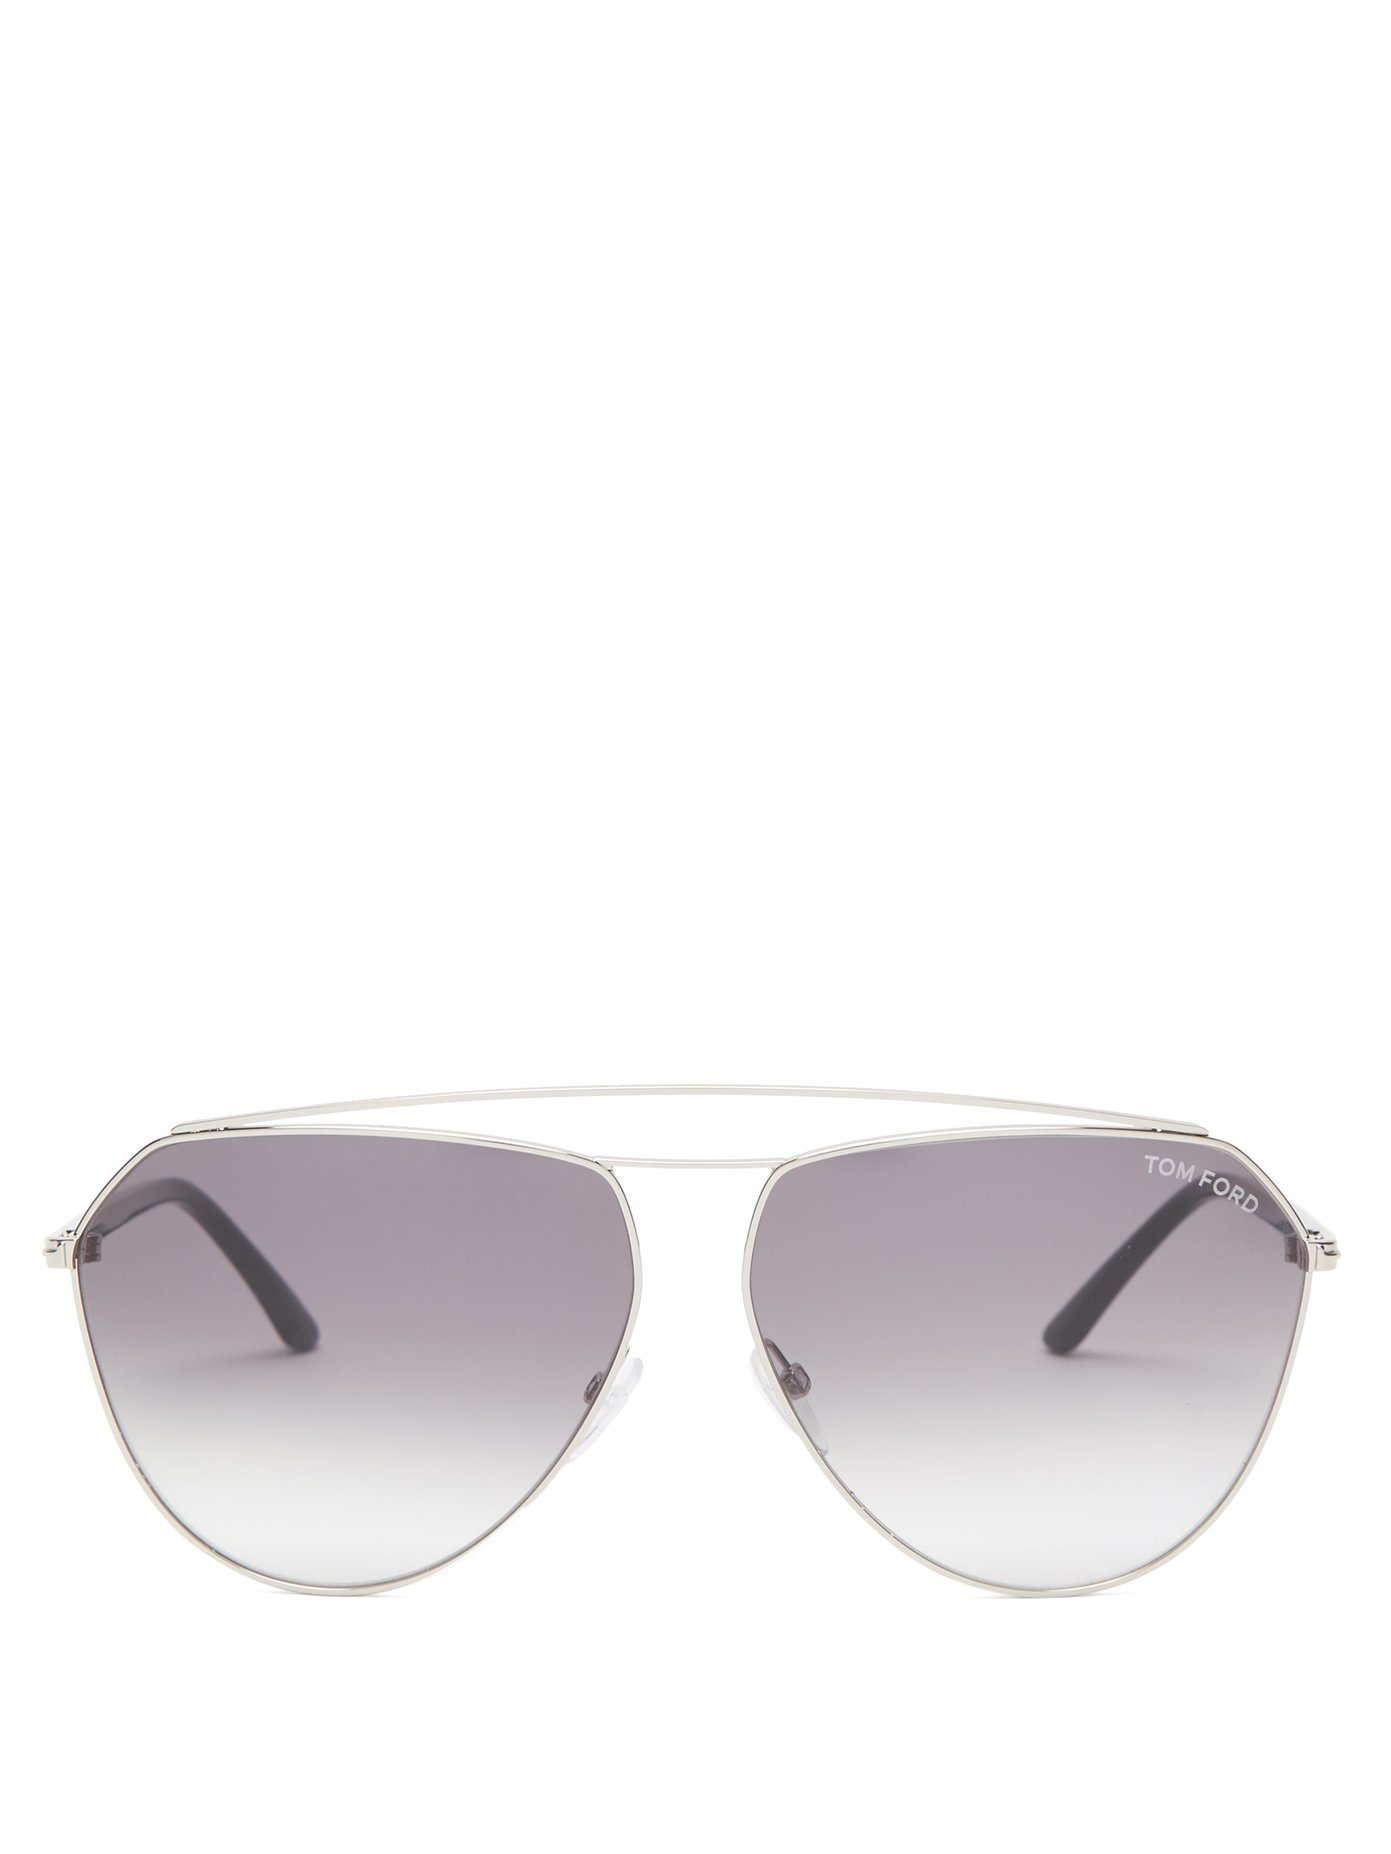 Lasered Logo Aviator Metal Sunglasses Tom Ford Eyewear Matchesfashion Us